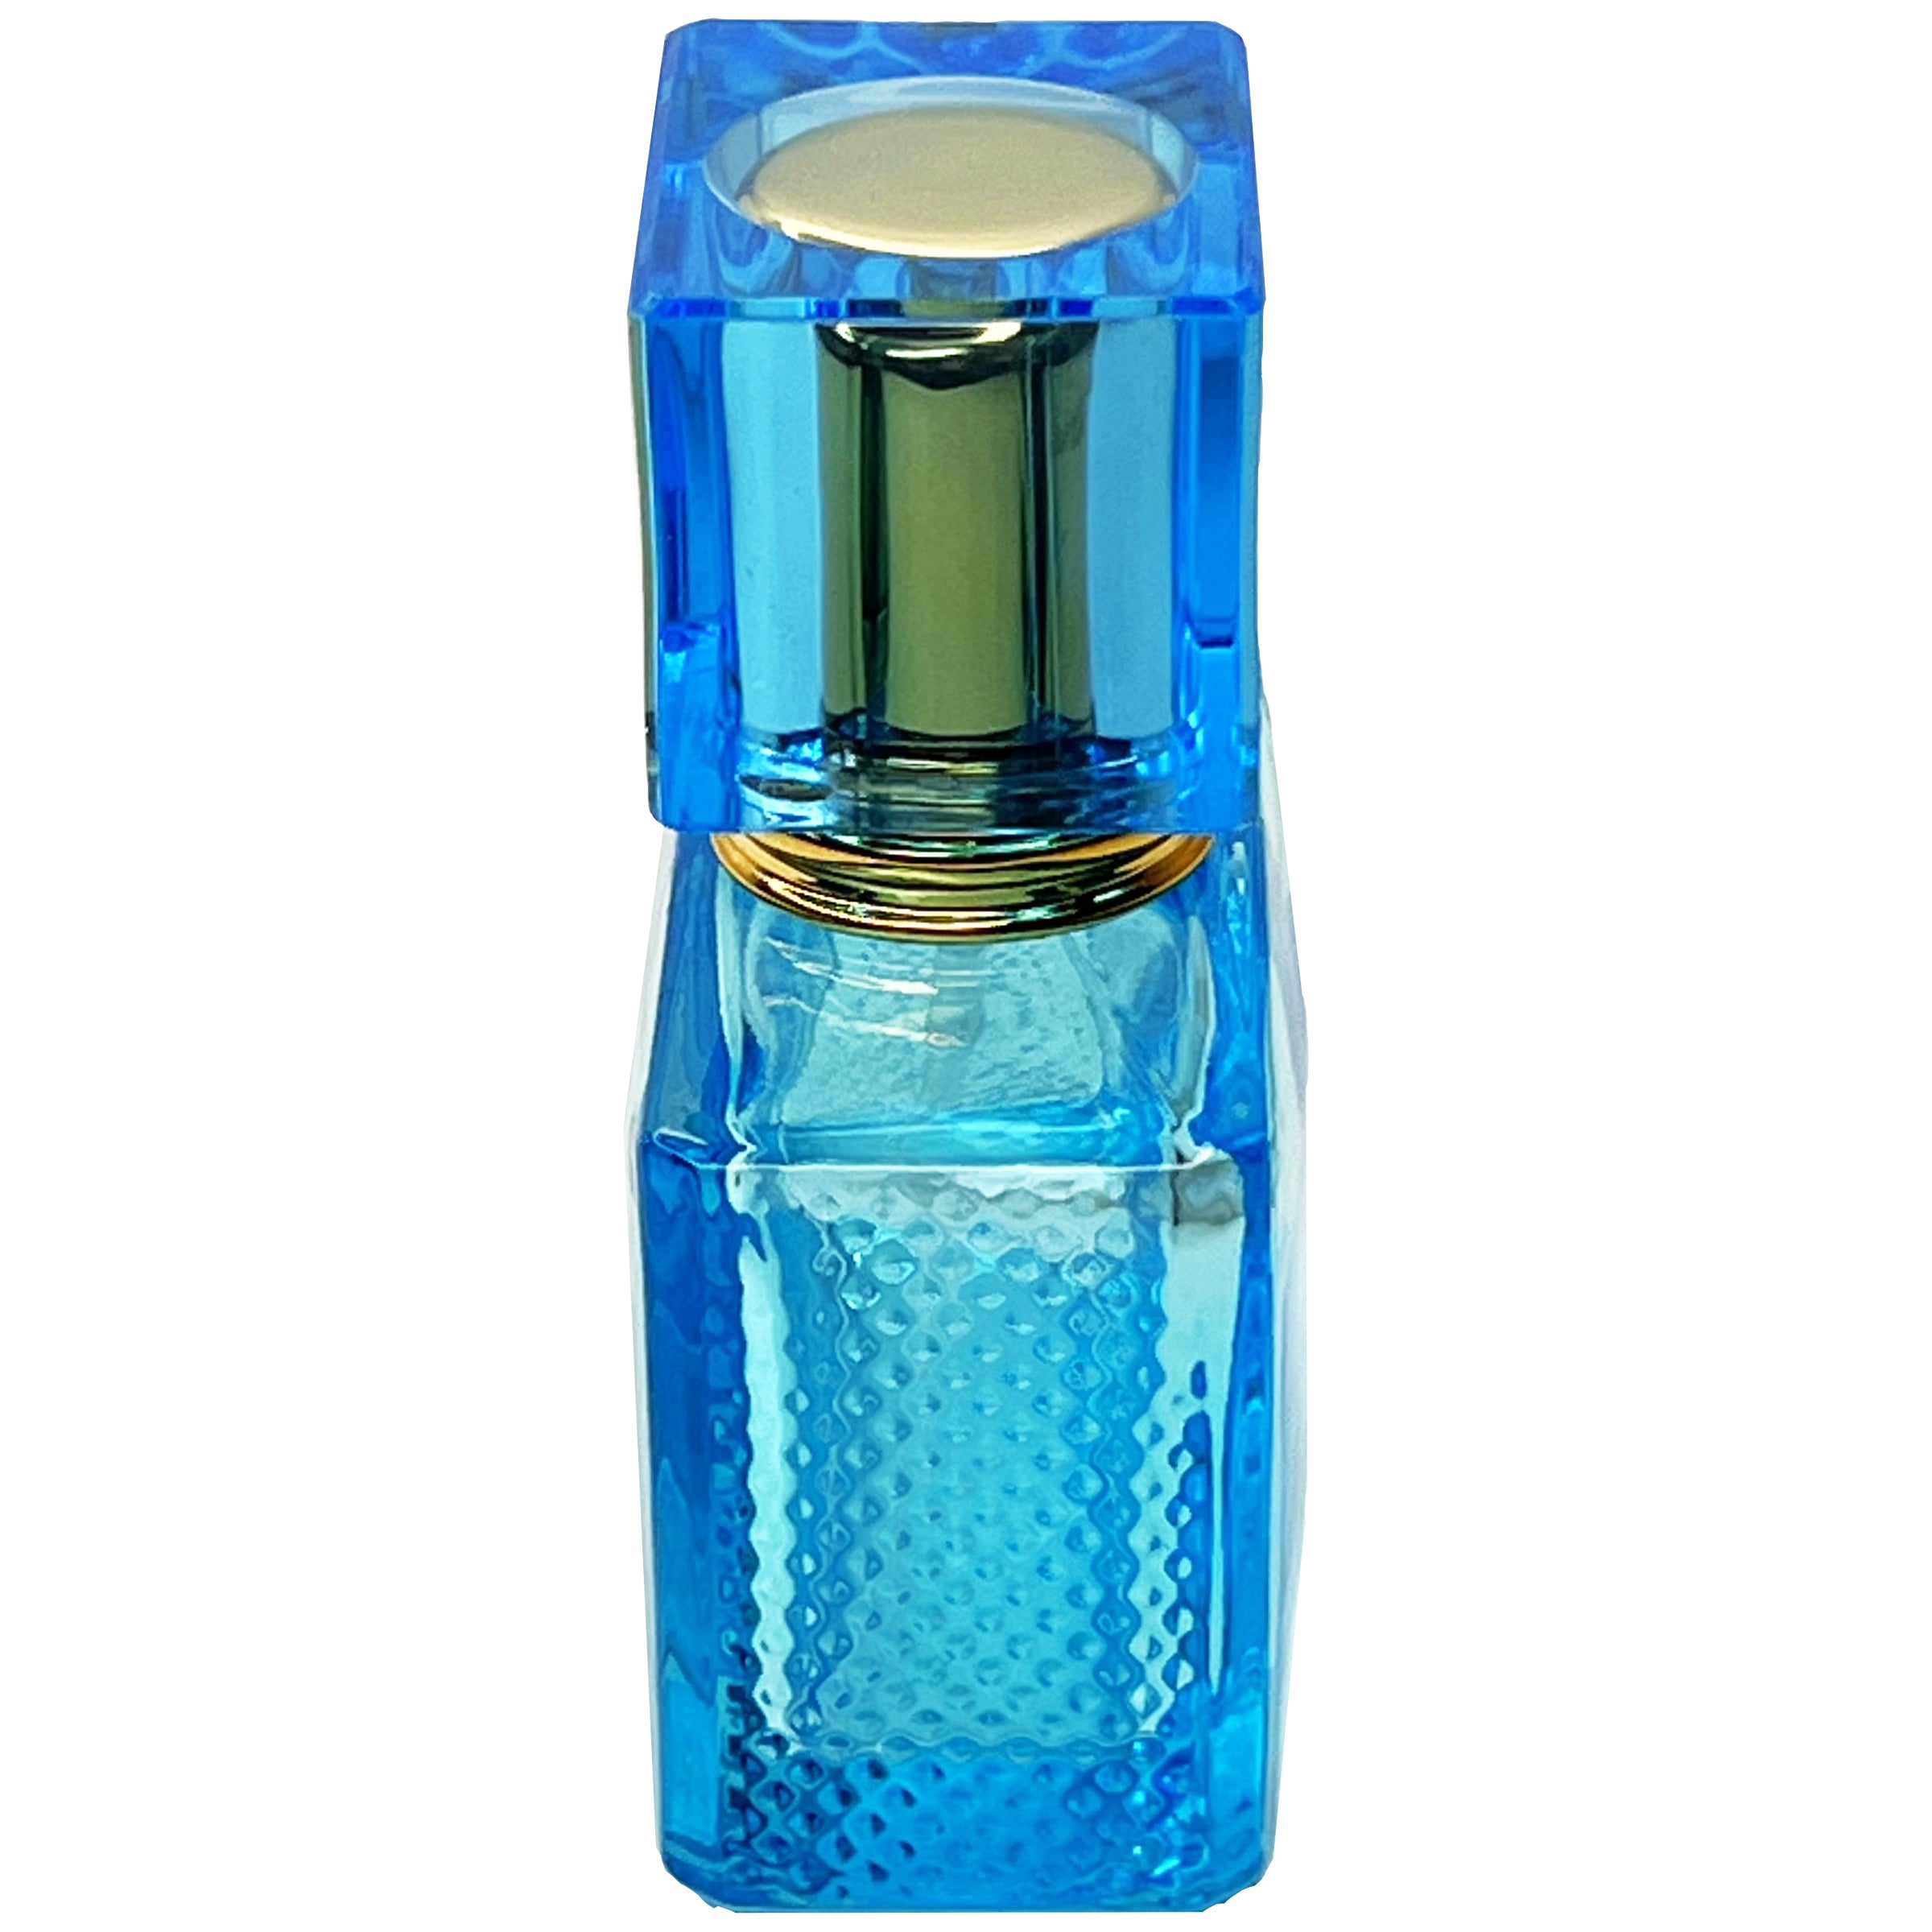 25ml 0.85oz colored glass perfume spray bottles